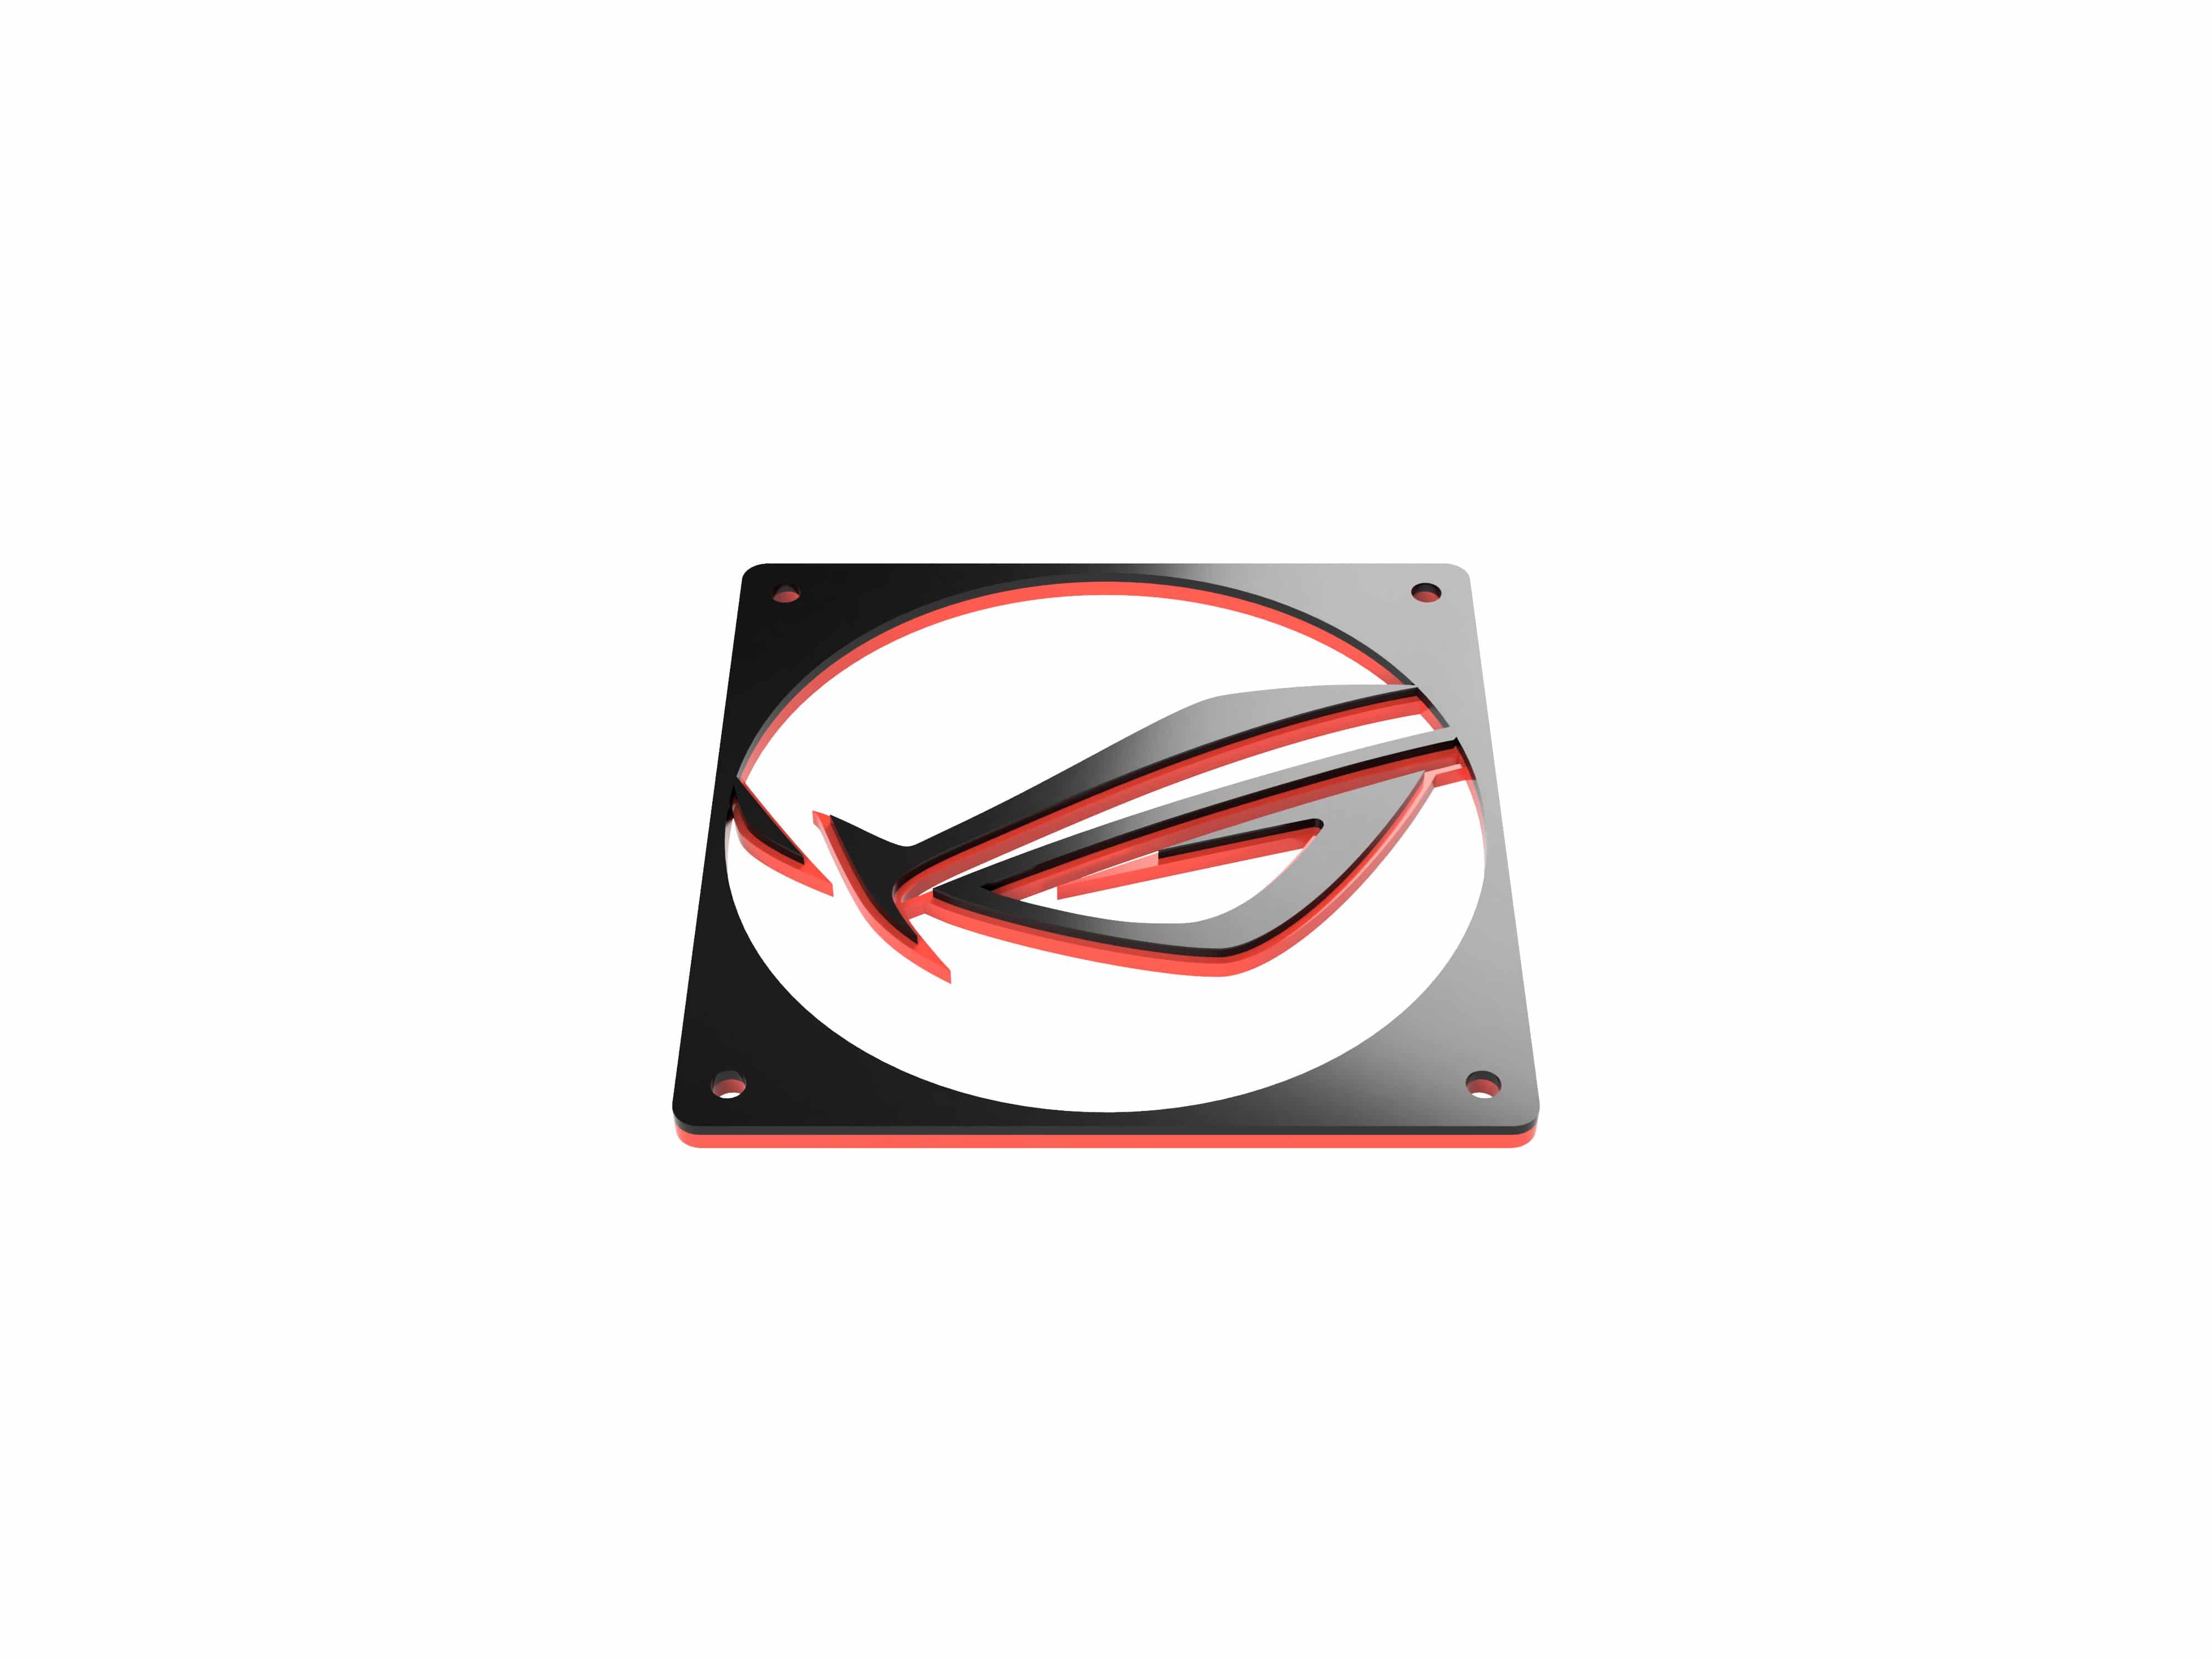 Asus ROG Logo - Asus ROG logo Fan Grill Choose Any Color! - Savant PCs